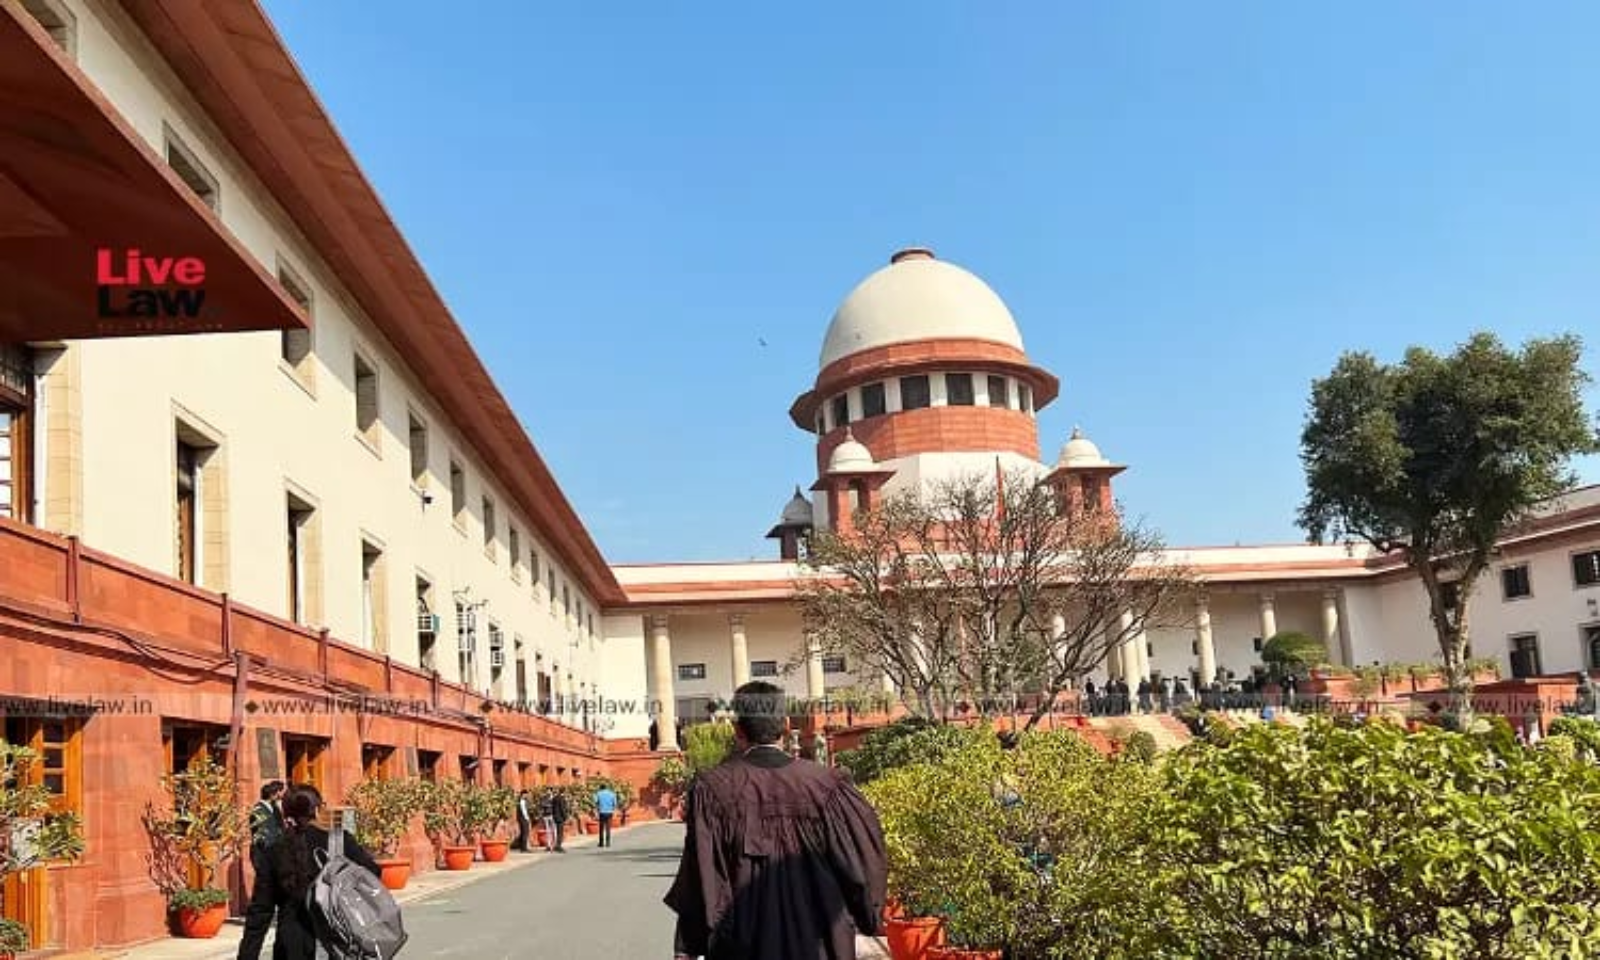 Rape Kand Jabardasti Chudai Wali Bf Video Hd - Substantial Progress Made To Prevent Circulation Of Child Porn, Rape Videos  On Social Media': Supreme Court Closes PIL